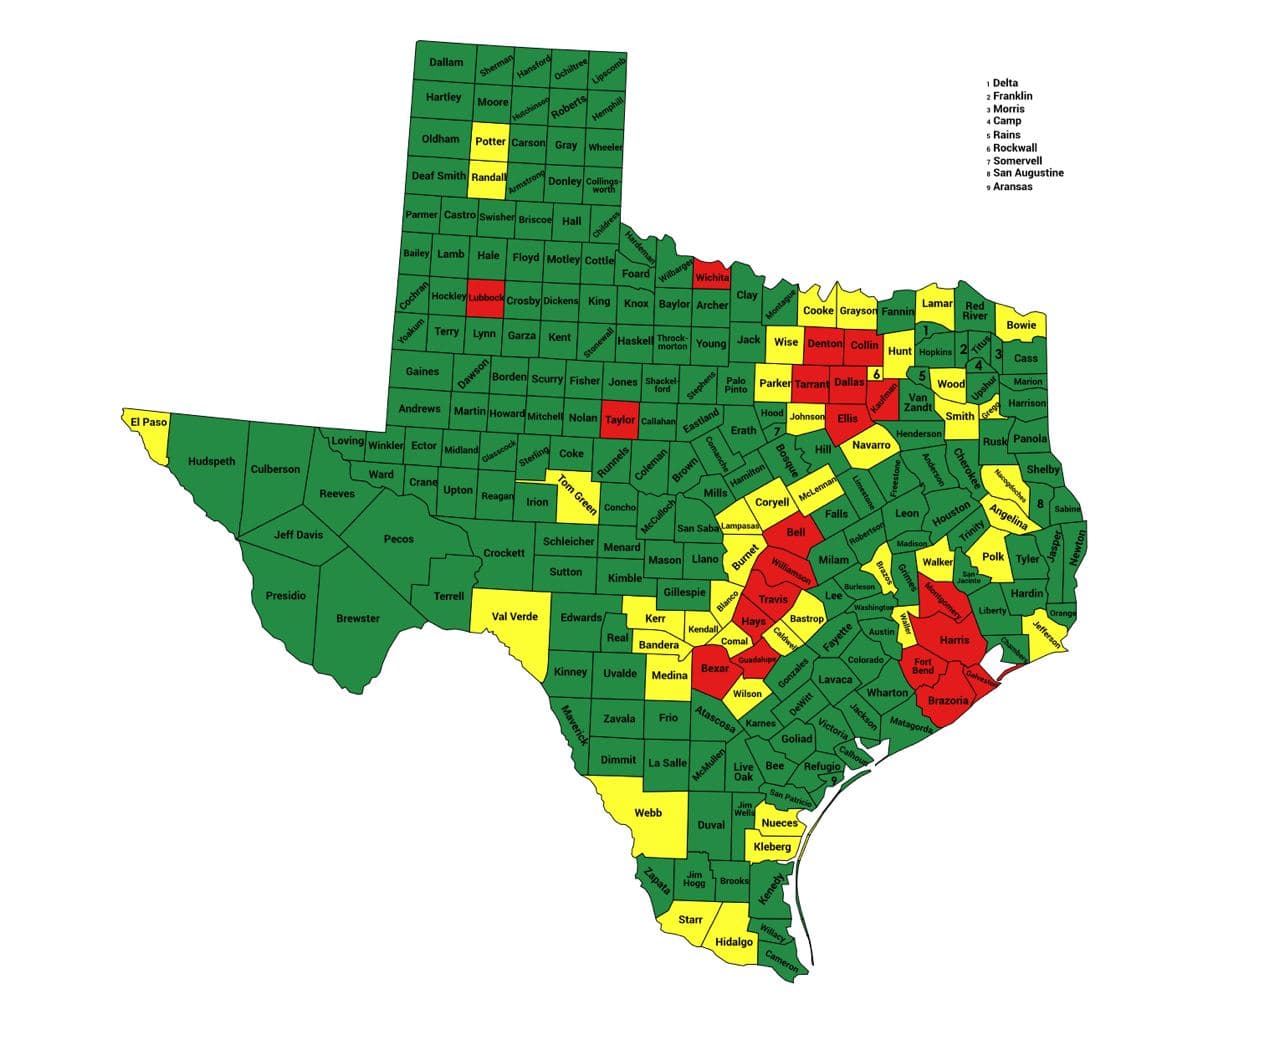 Seth Keshel County Trend Map for Texas